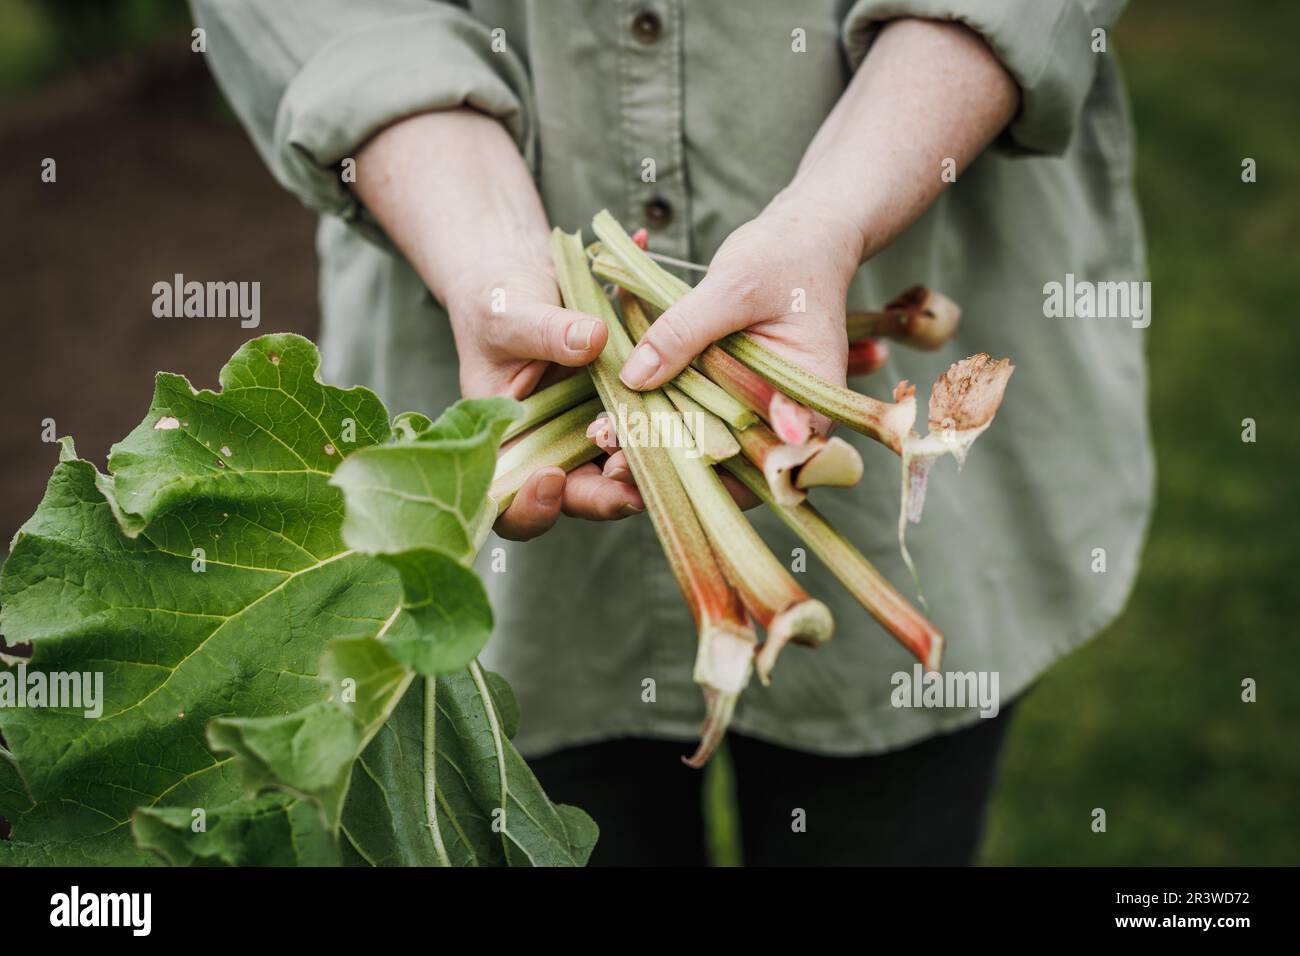 Rhubarb harvesting in organic garden. Woman holding rhubarb stalk in her hands Stock Photo